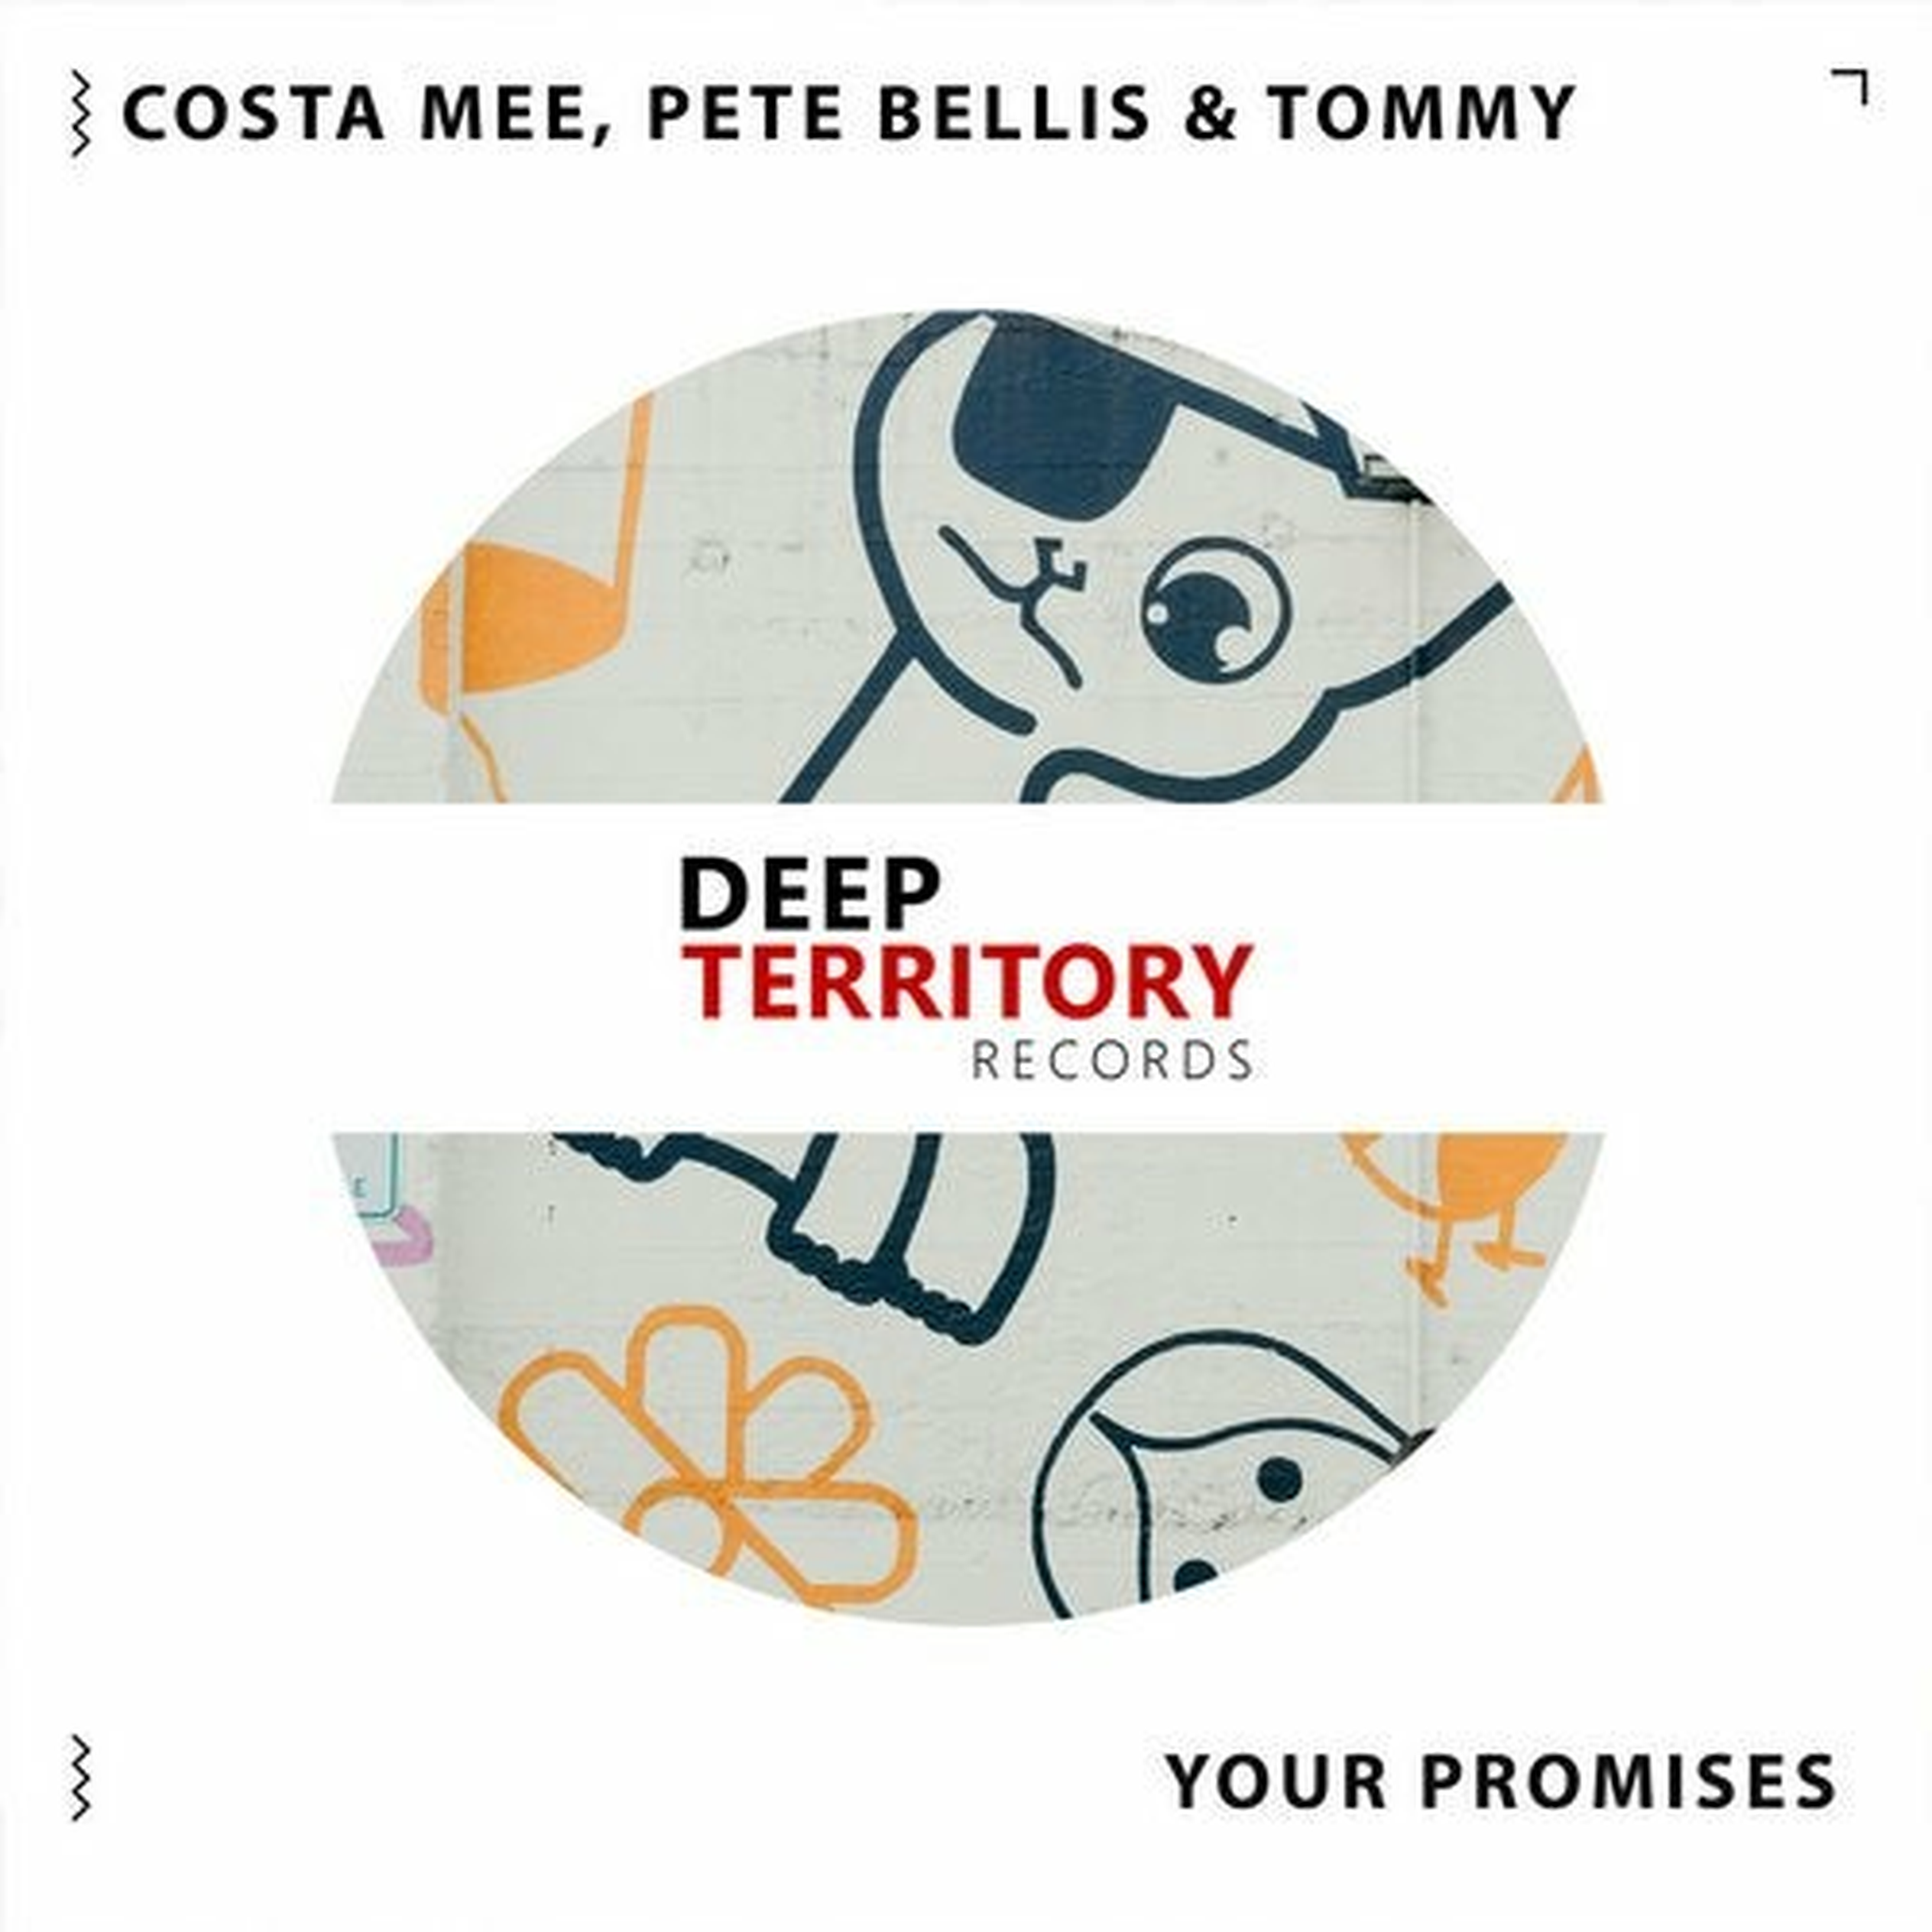 Costa mee feels. Costa mee & Pete Bellis & Tommy. Costa mee Pete Bellis Tommy looking for you. Pete Bellis Deep Territory. Costa mee & Pete Bellis & Tommy - take a Deep Breath.